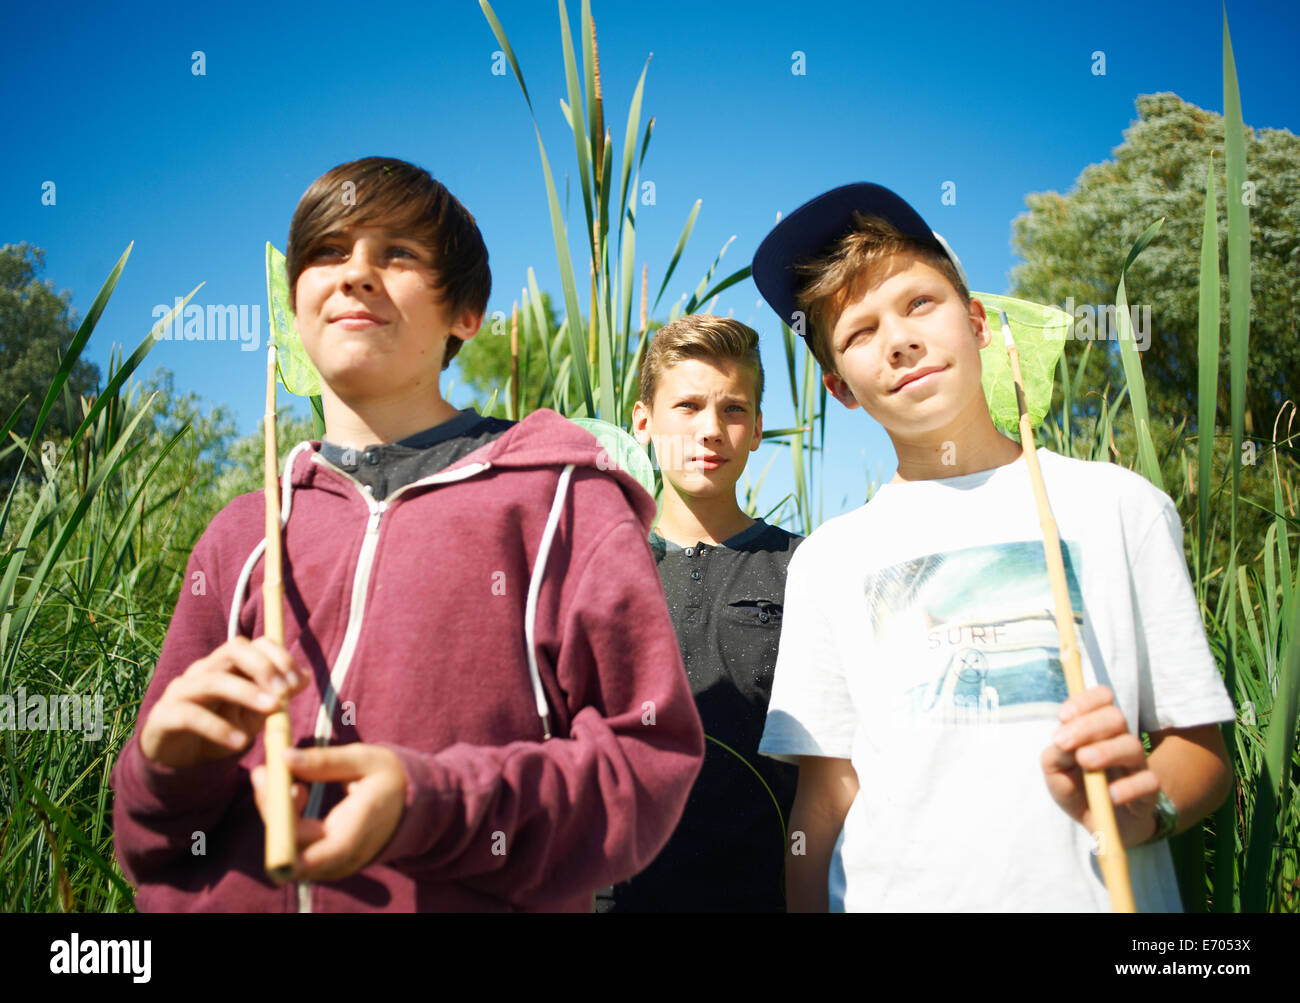 Boys holding fishing nets Stock Photo